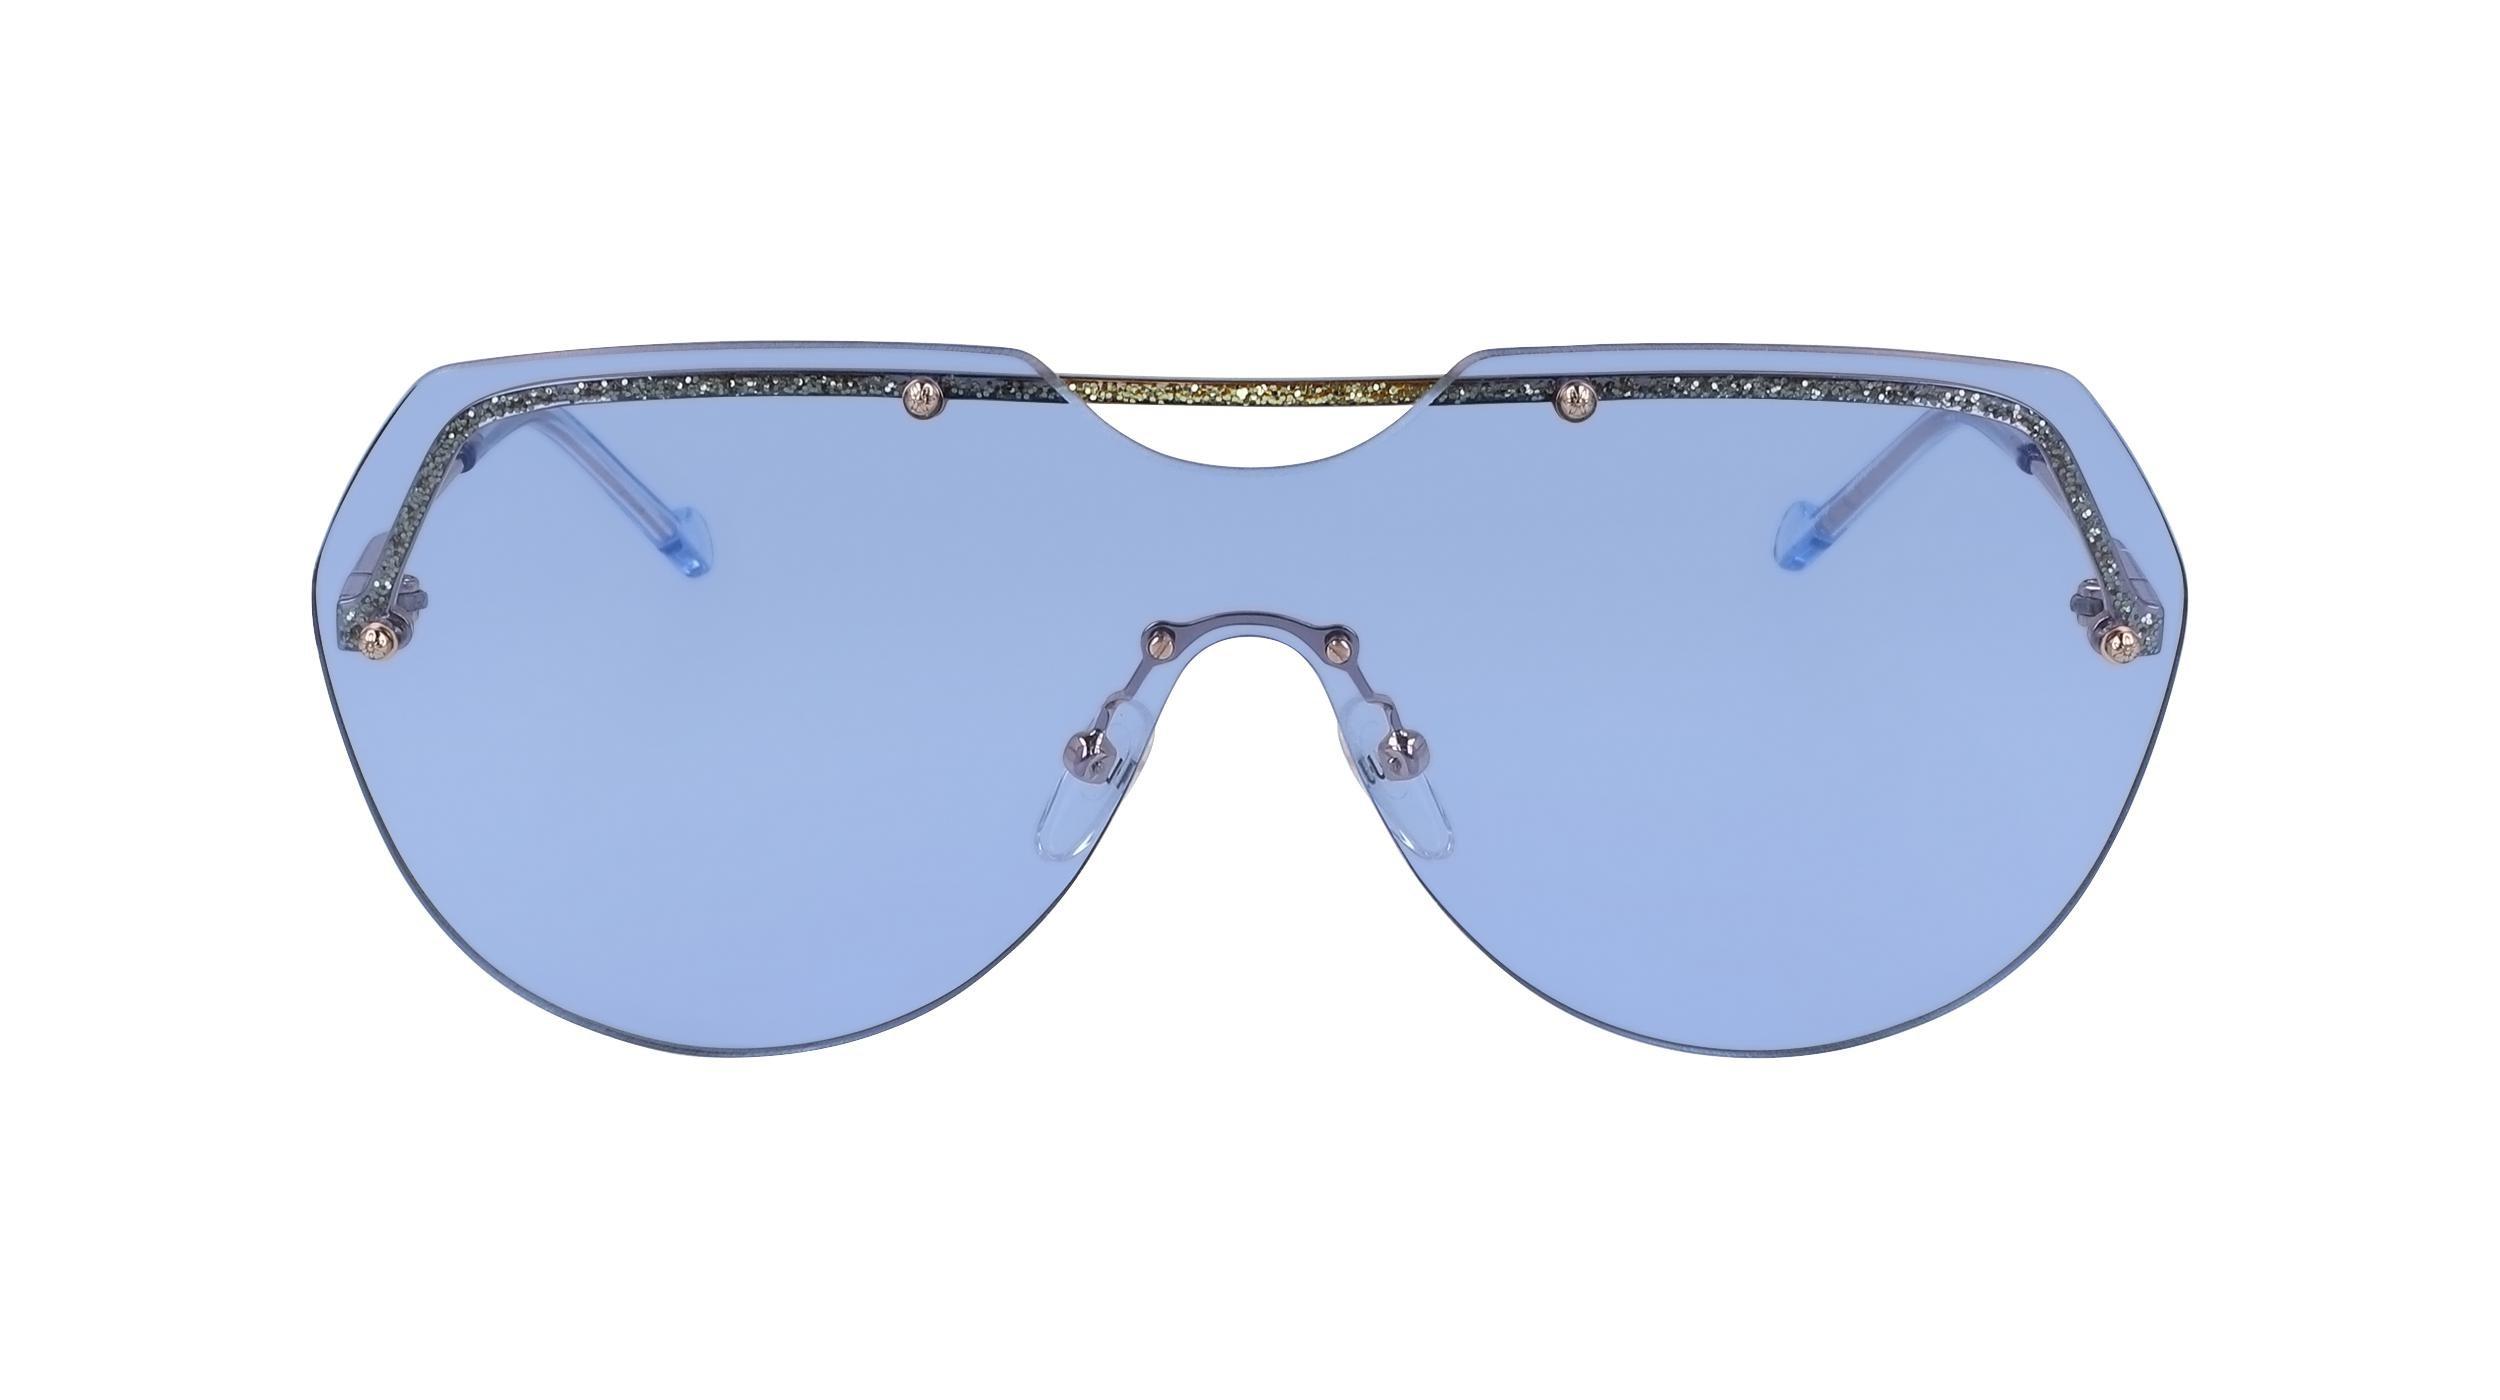 LACOSTE - Lacoste Women Matte Blue Shield Sunglasses - L817S-424